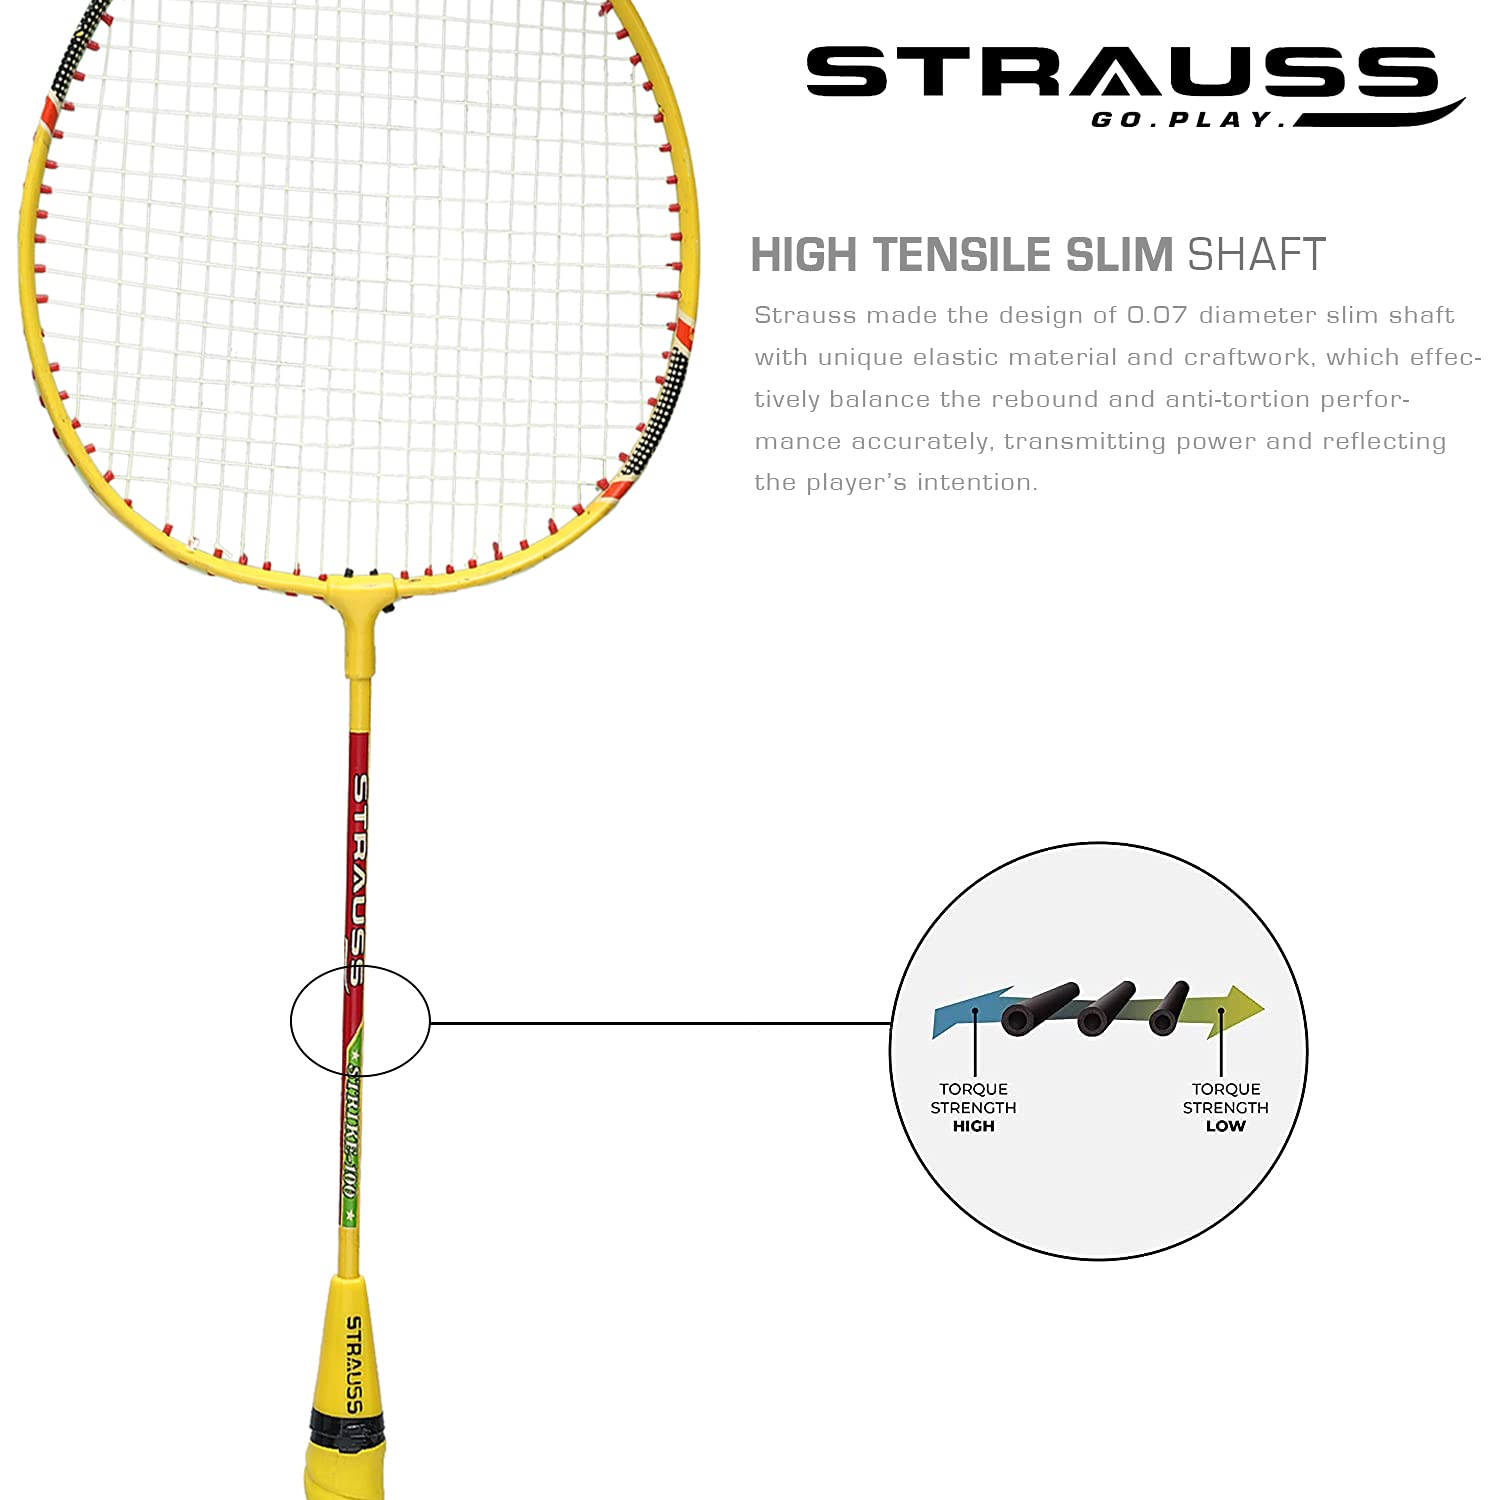 STRAUSS Iron Strike 102 Badminton Racquet Set with Shuttlecock, (Orange)